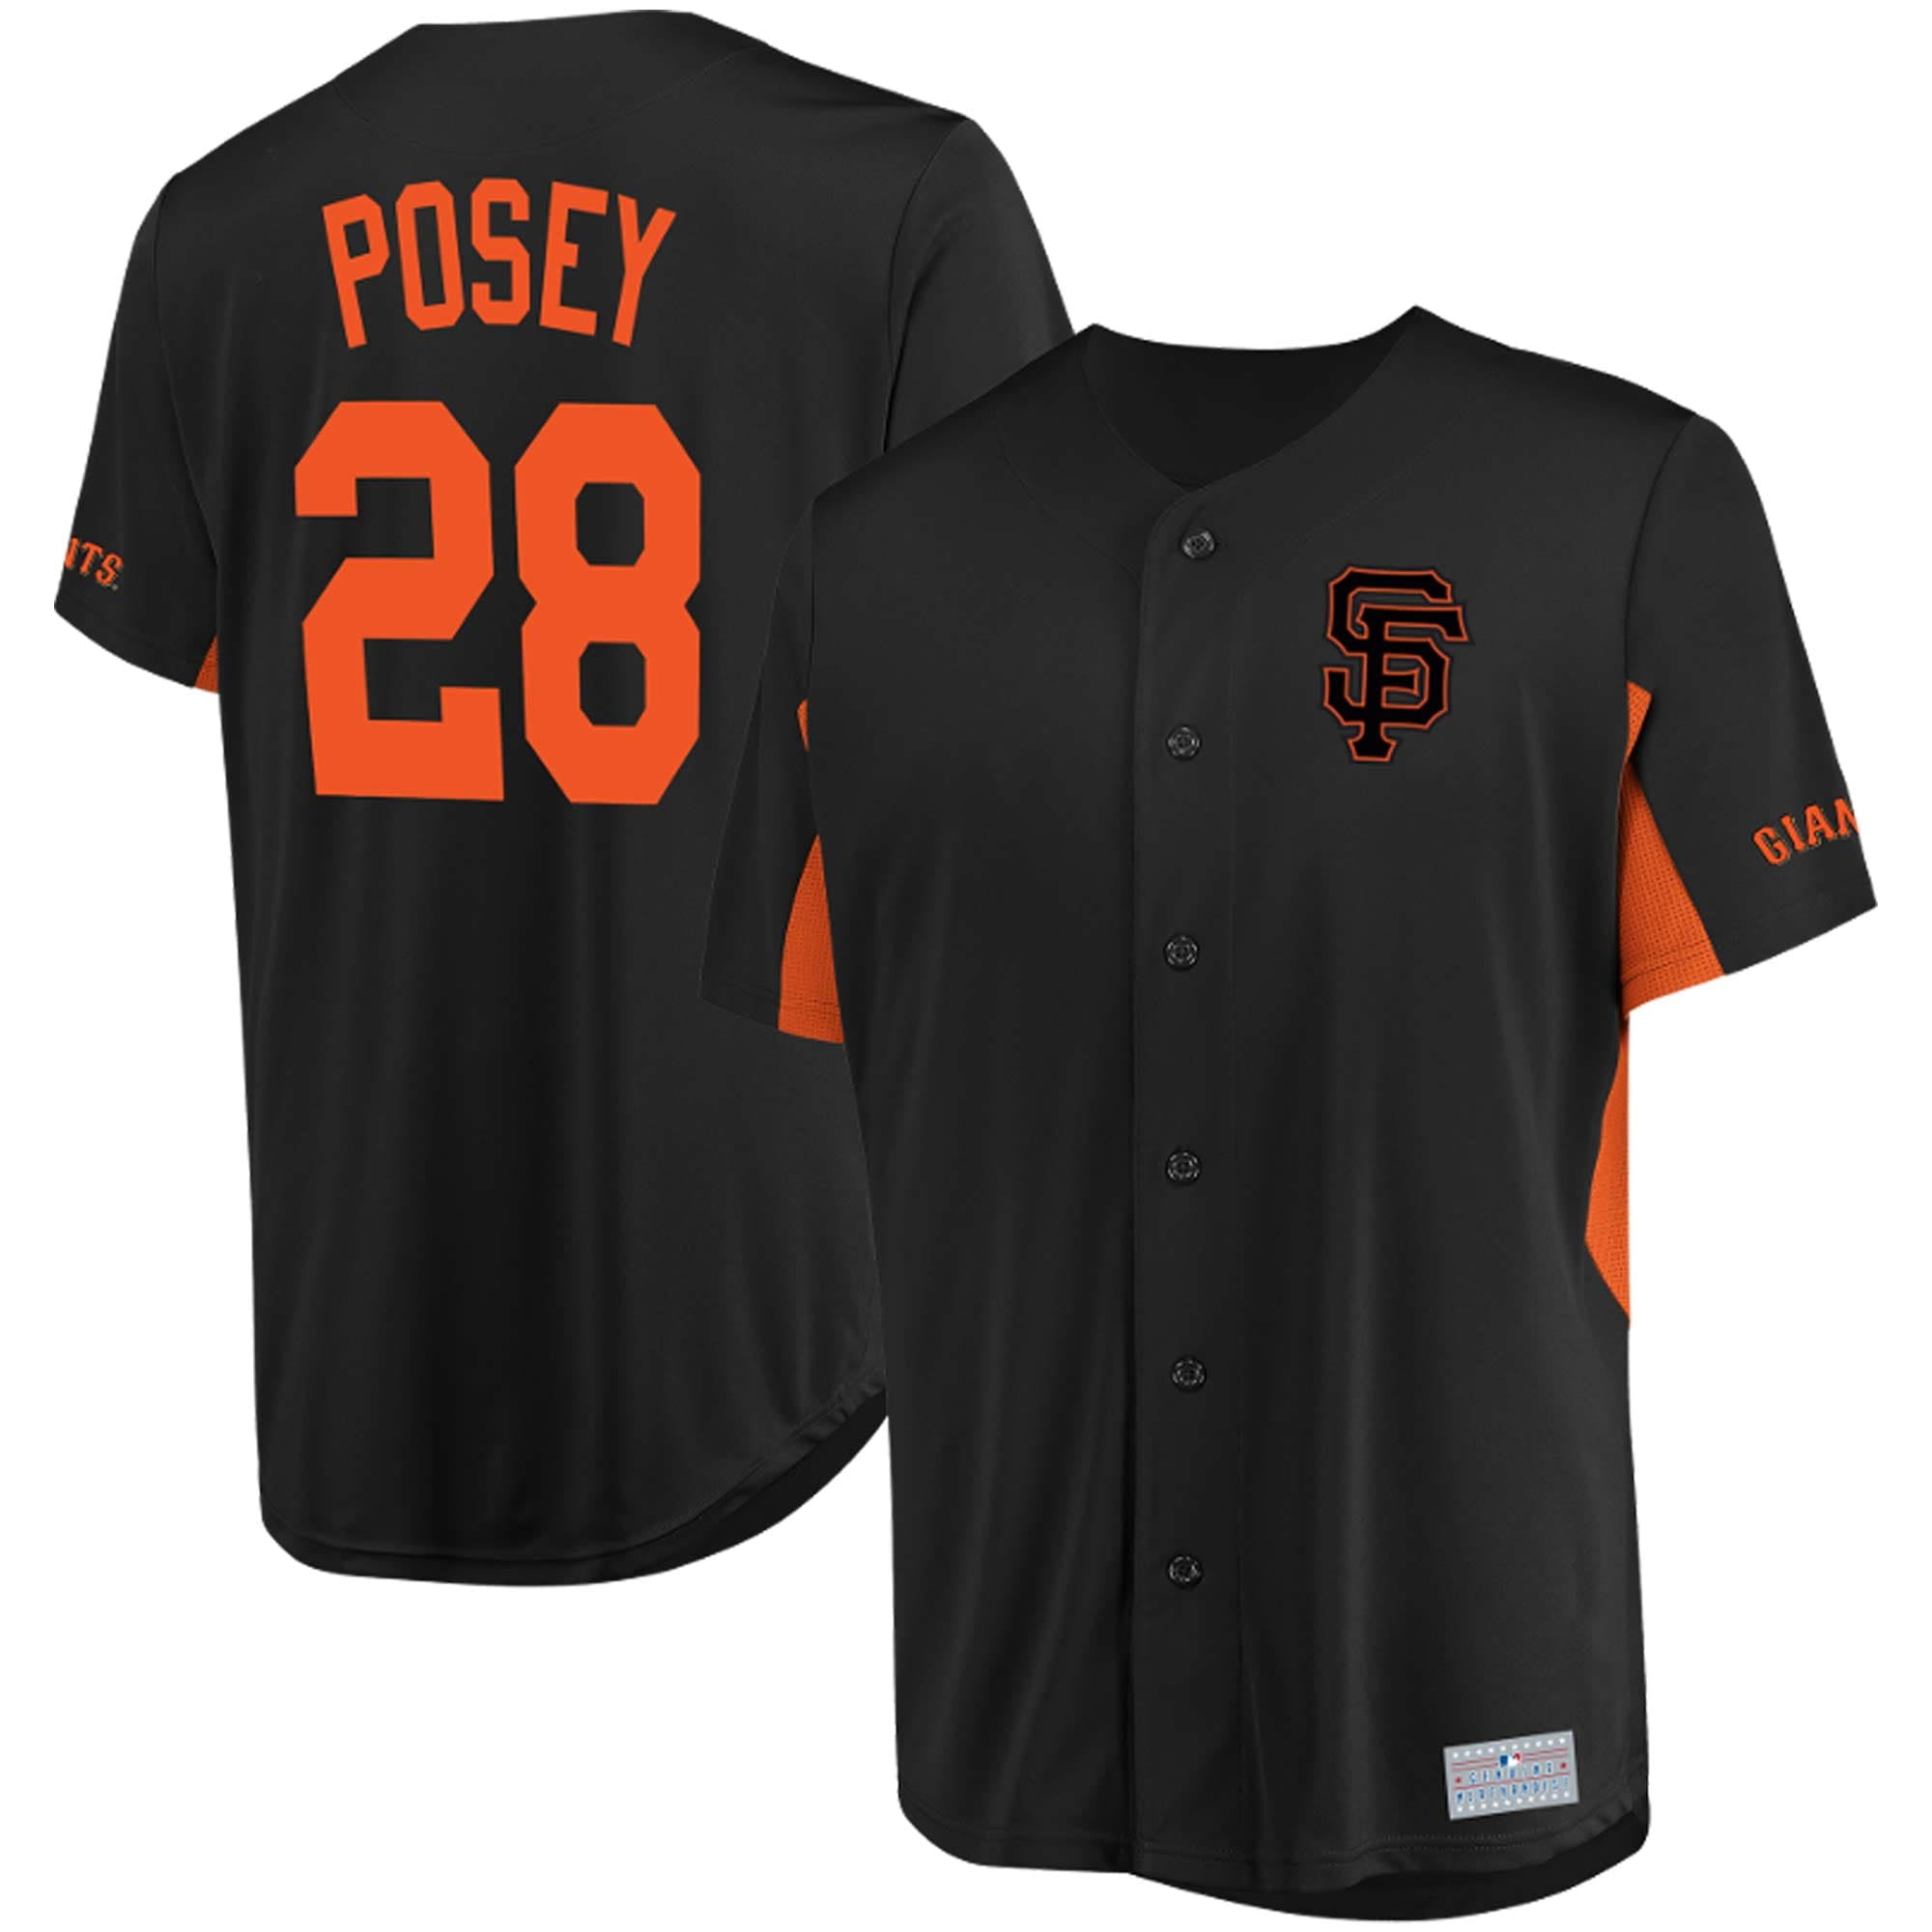 Buster Posey San Francisco Giants Majestic MLB Jersey - Black - Walmart.com - Walmart.com